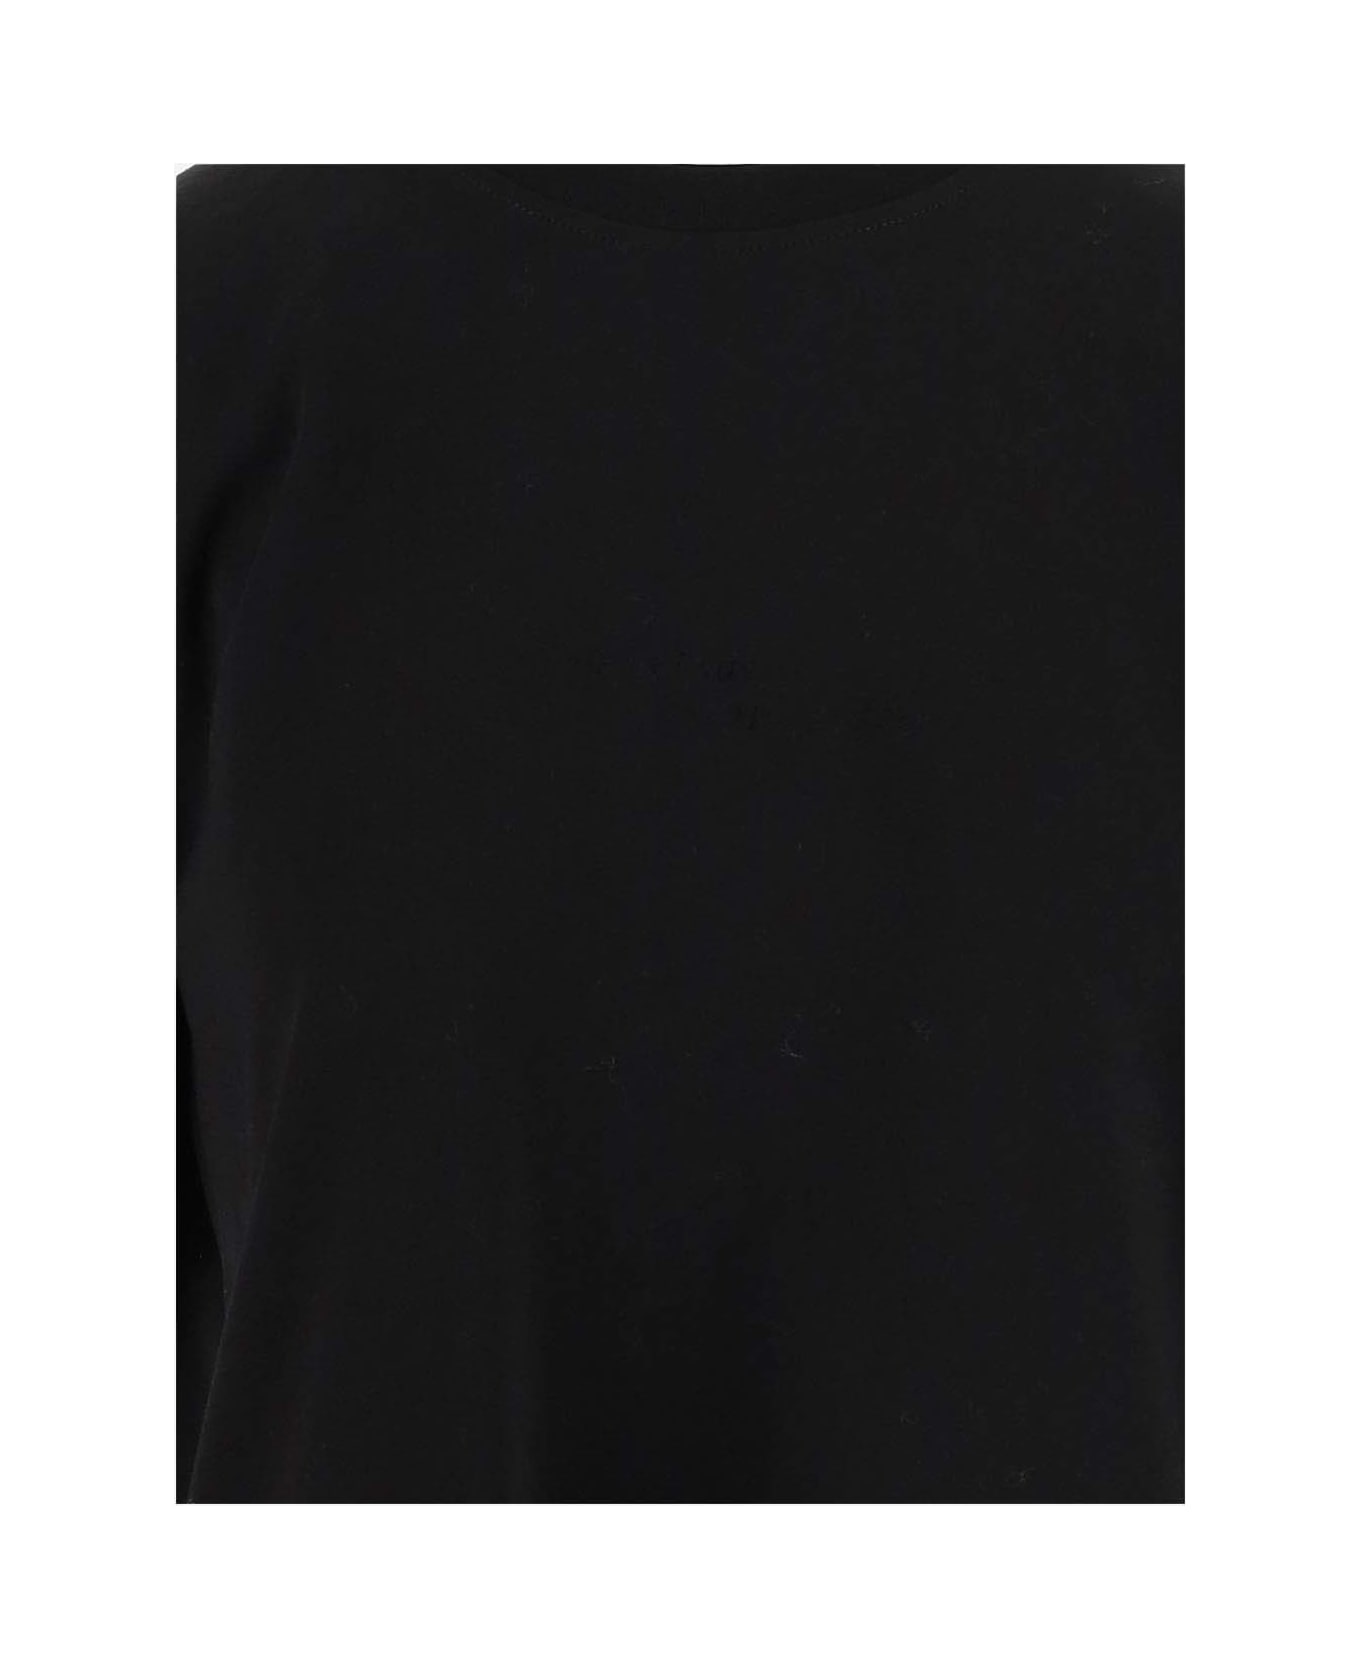 Victoria Beckham Cotton T-shirt - Black